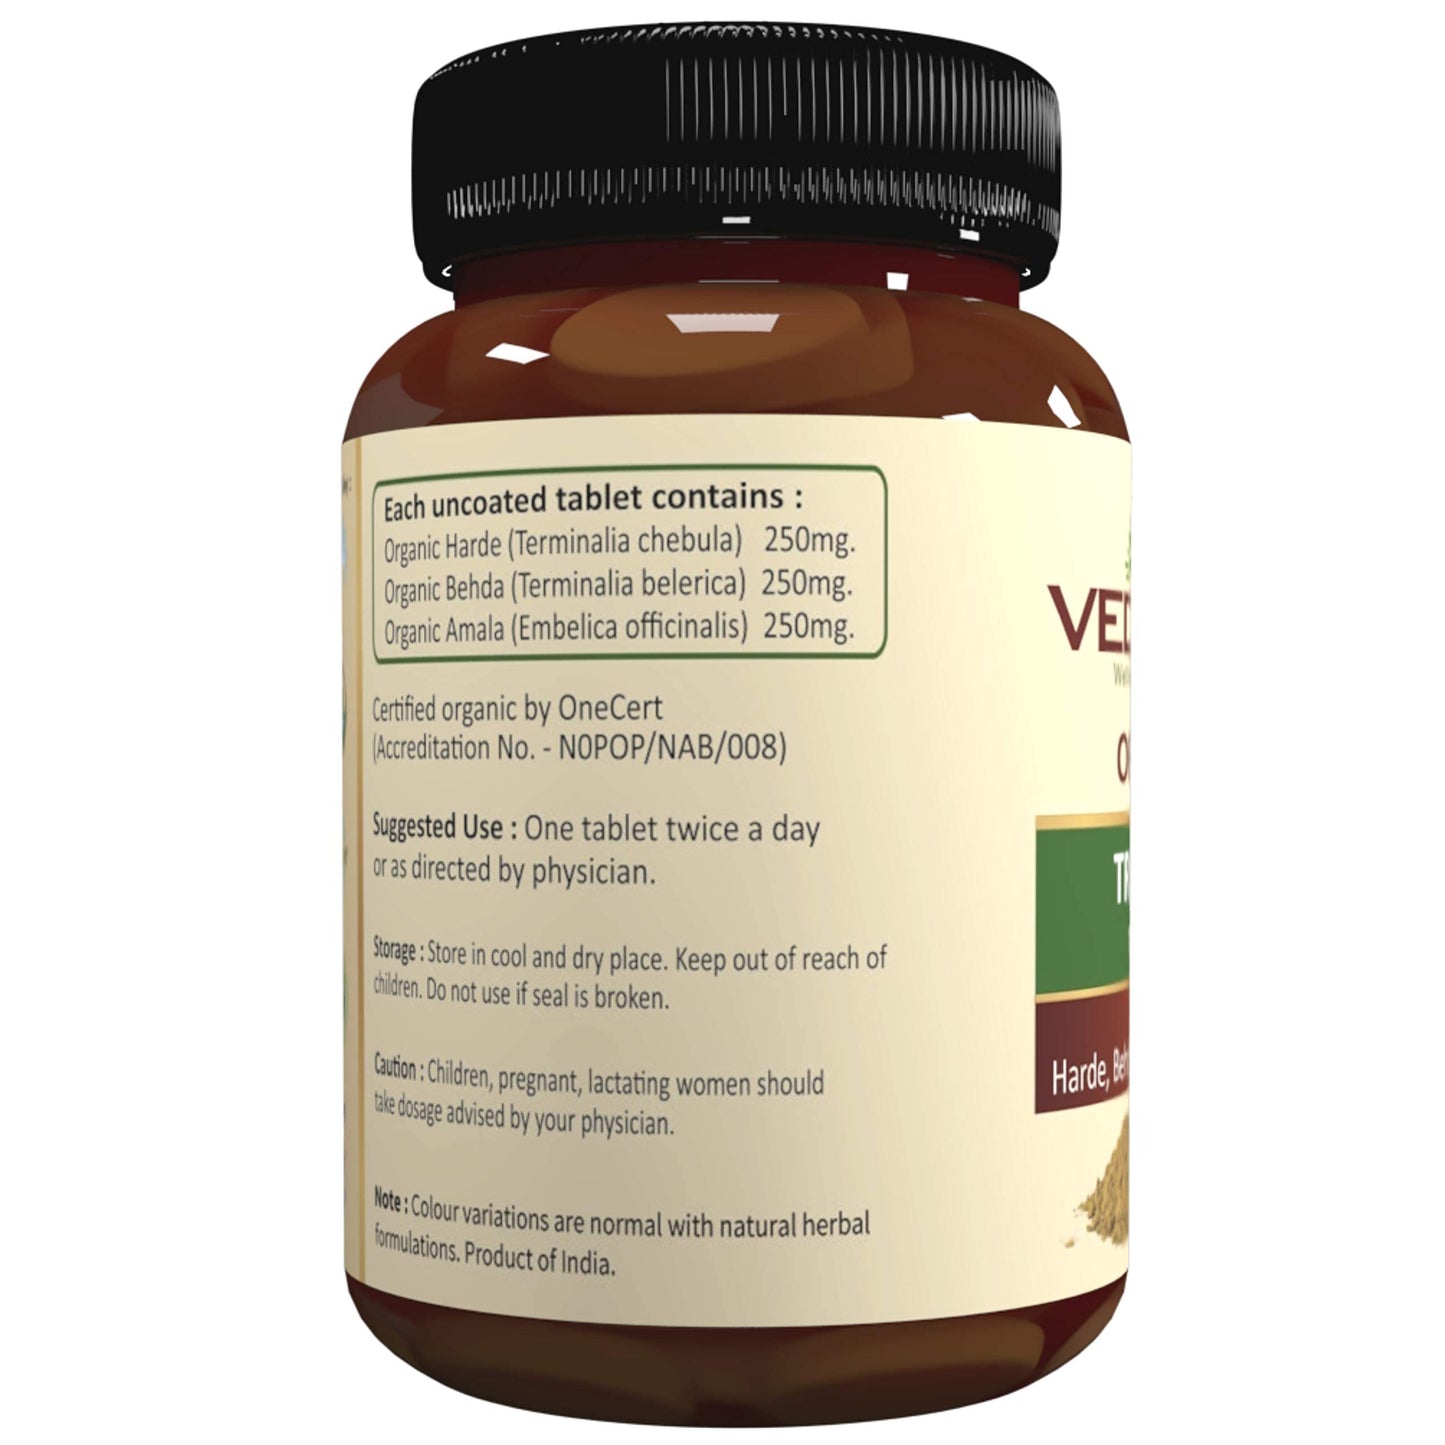 Vedaone USDA Organic Triphala (Amala+Harde+Behda) 750mg - 60 Tablets For Detoxification